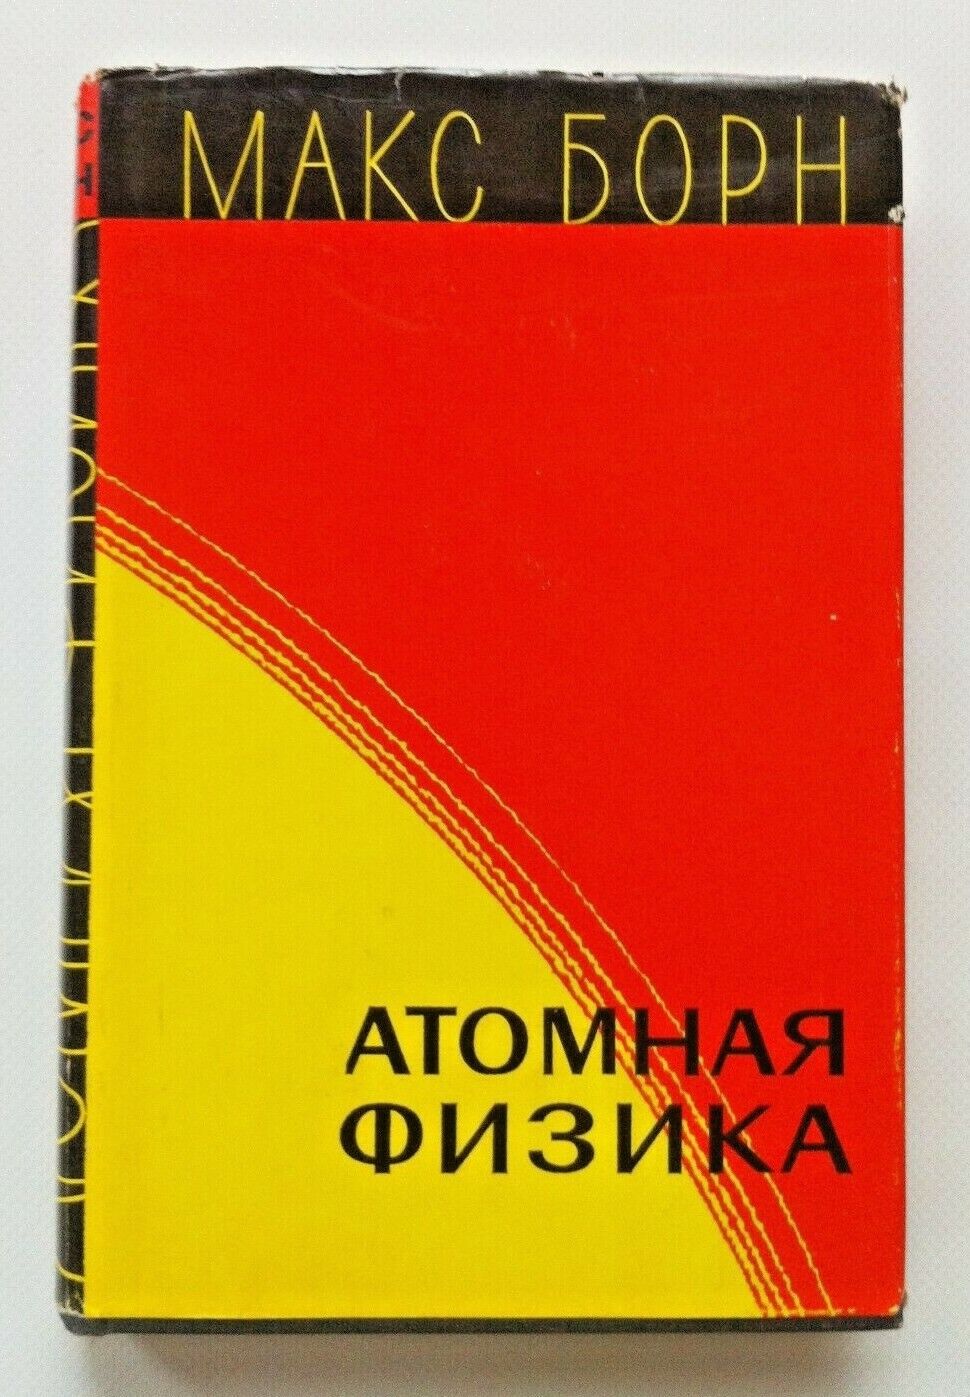 1970 Атомная физика Борн Atomic physics Born Nuclear Quantum Russian book